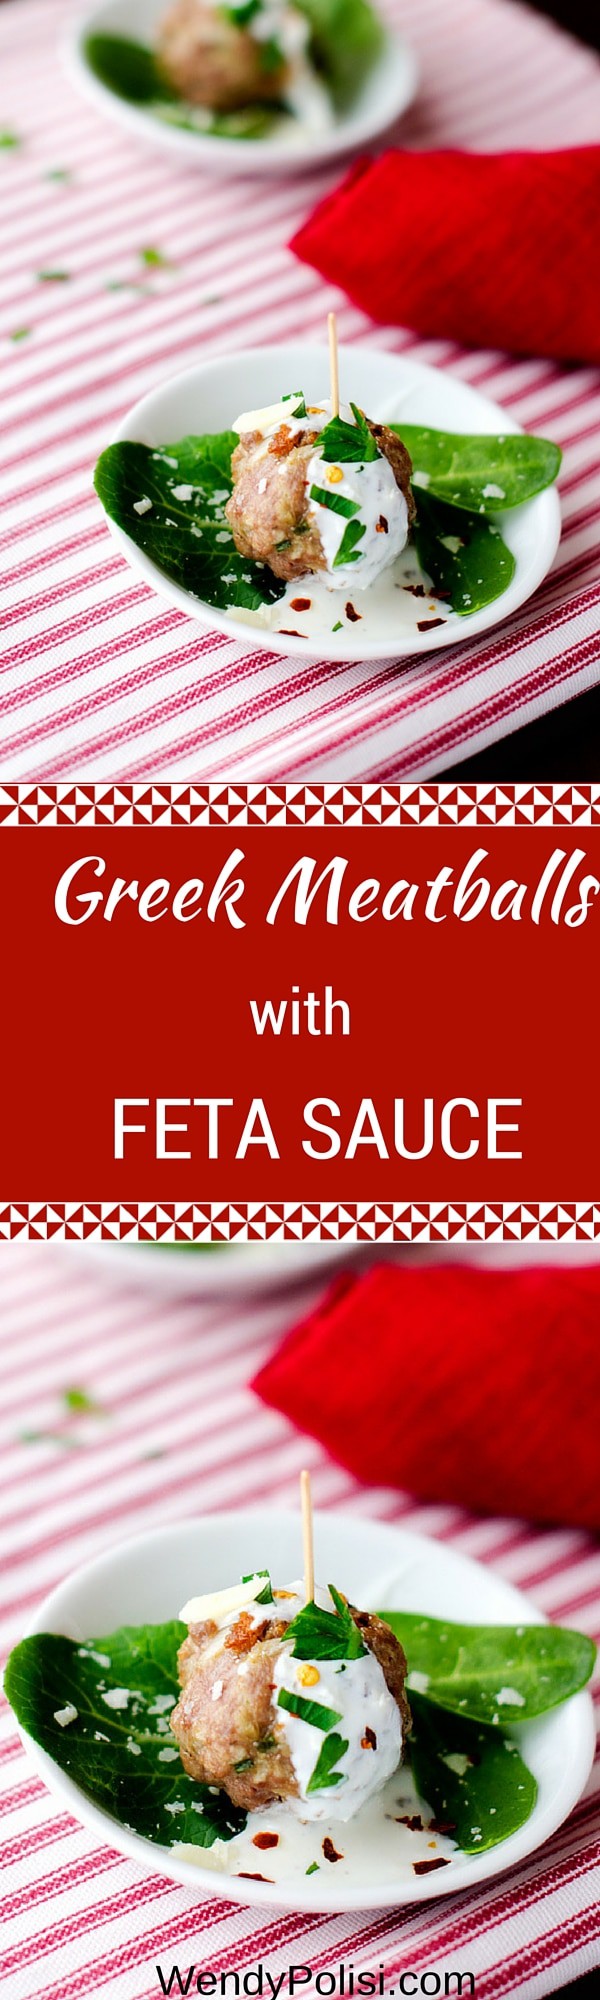 Greek Meatballs with Feta Sauce